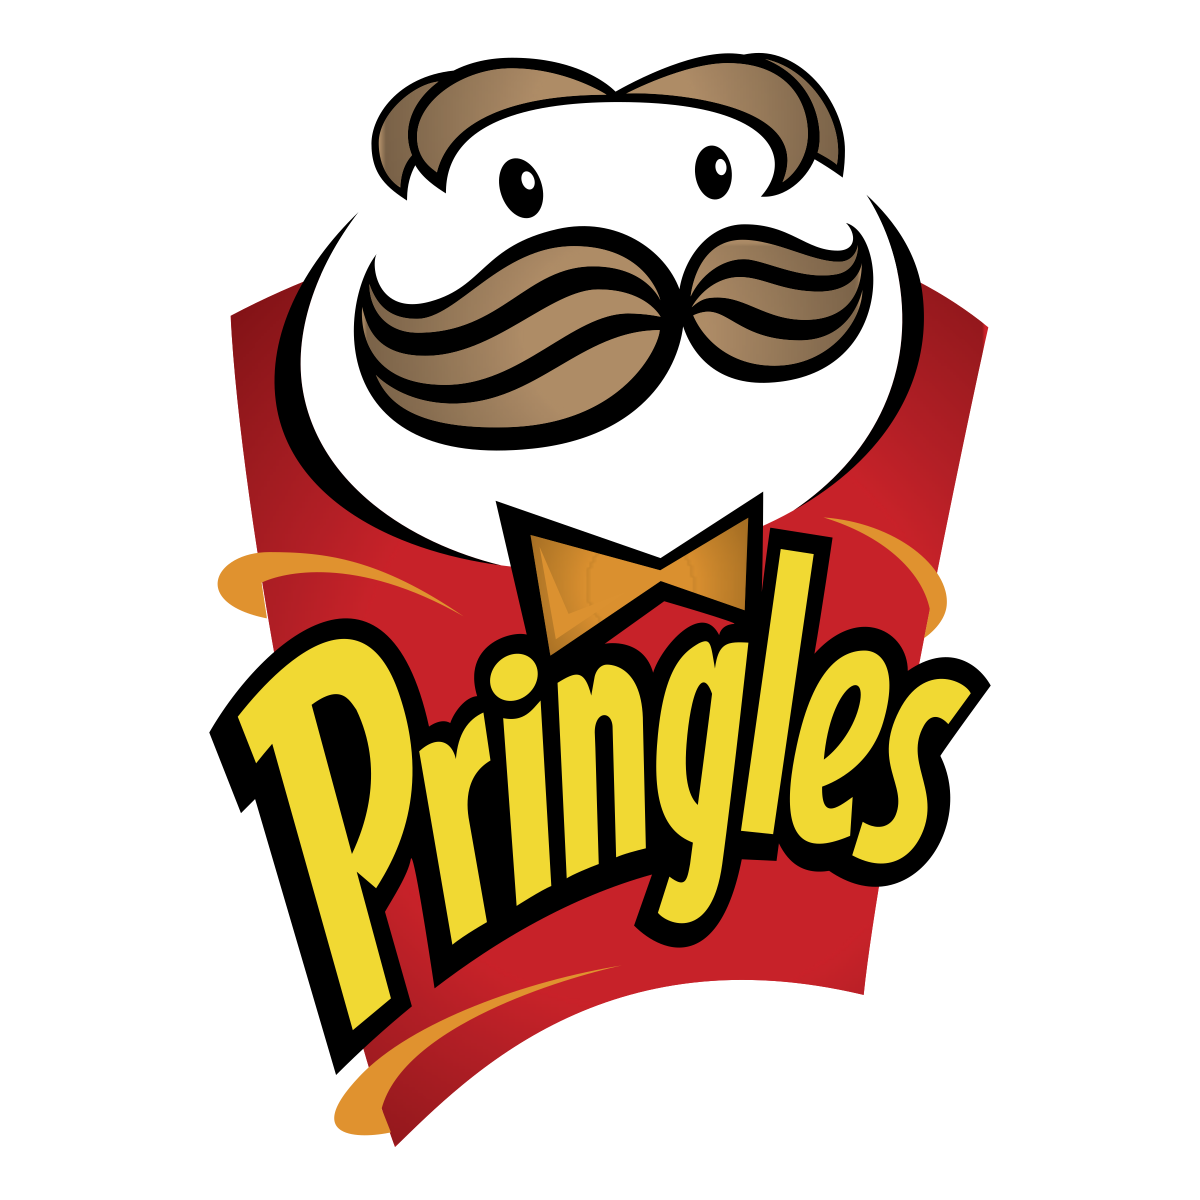 pringles-original-flavour-logo-png-transparent.png